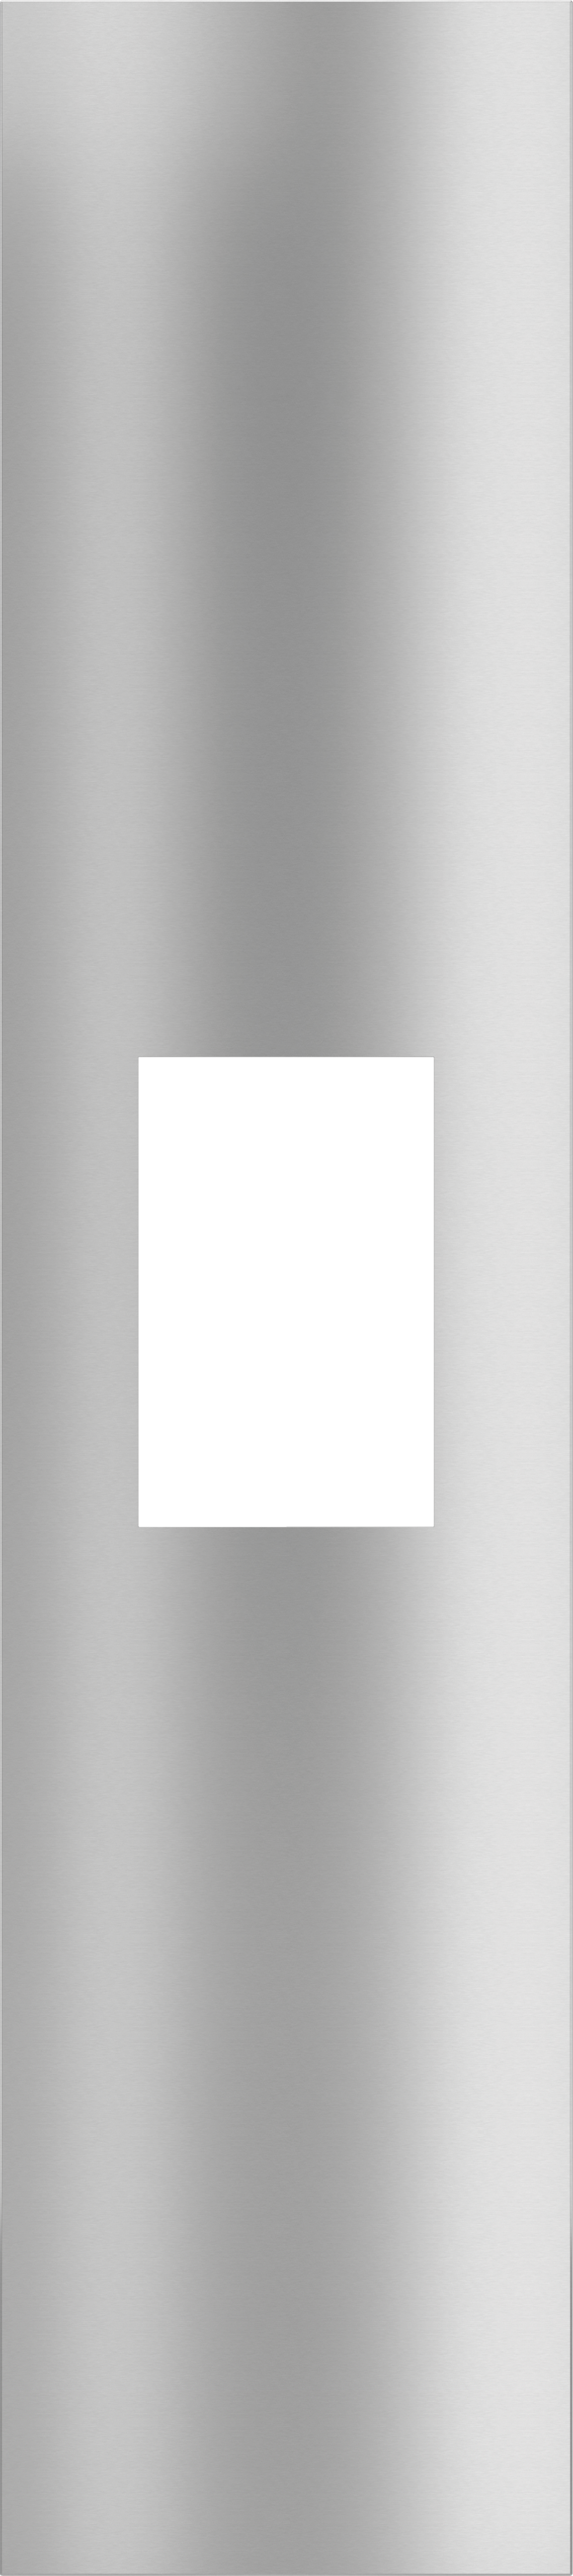 Refrigeration - KFP 1845 ed/cs - 1